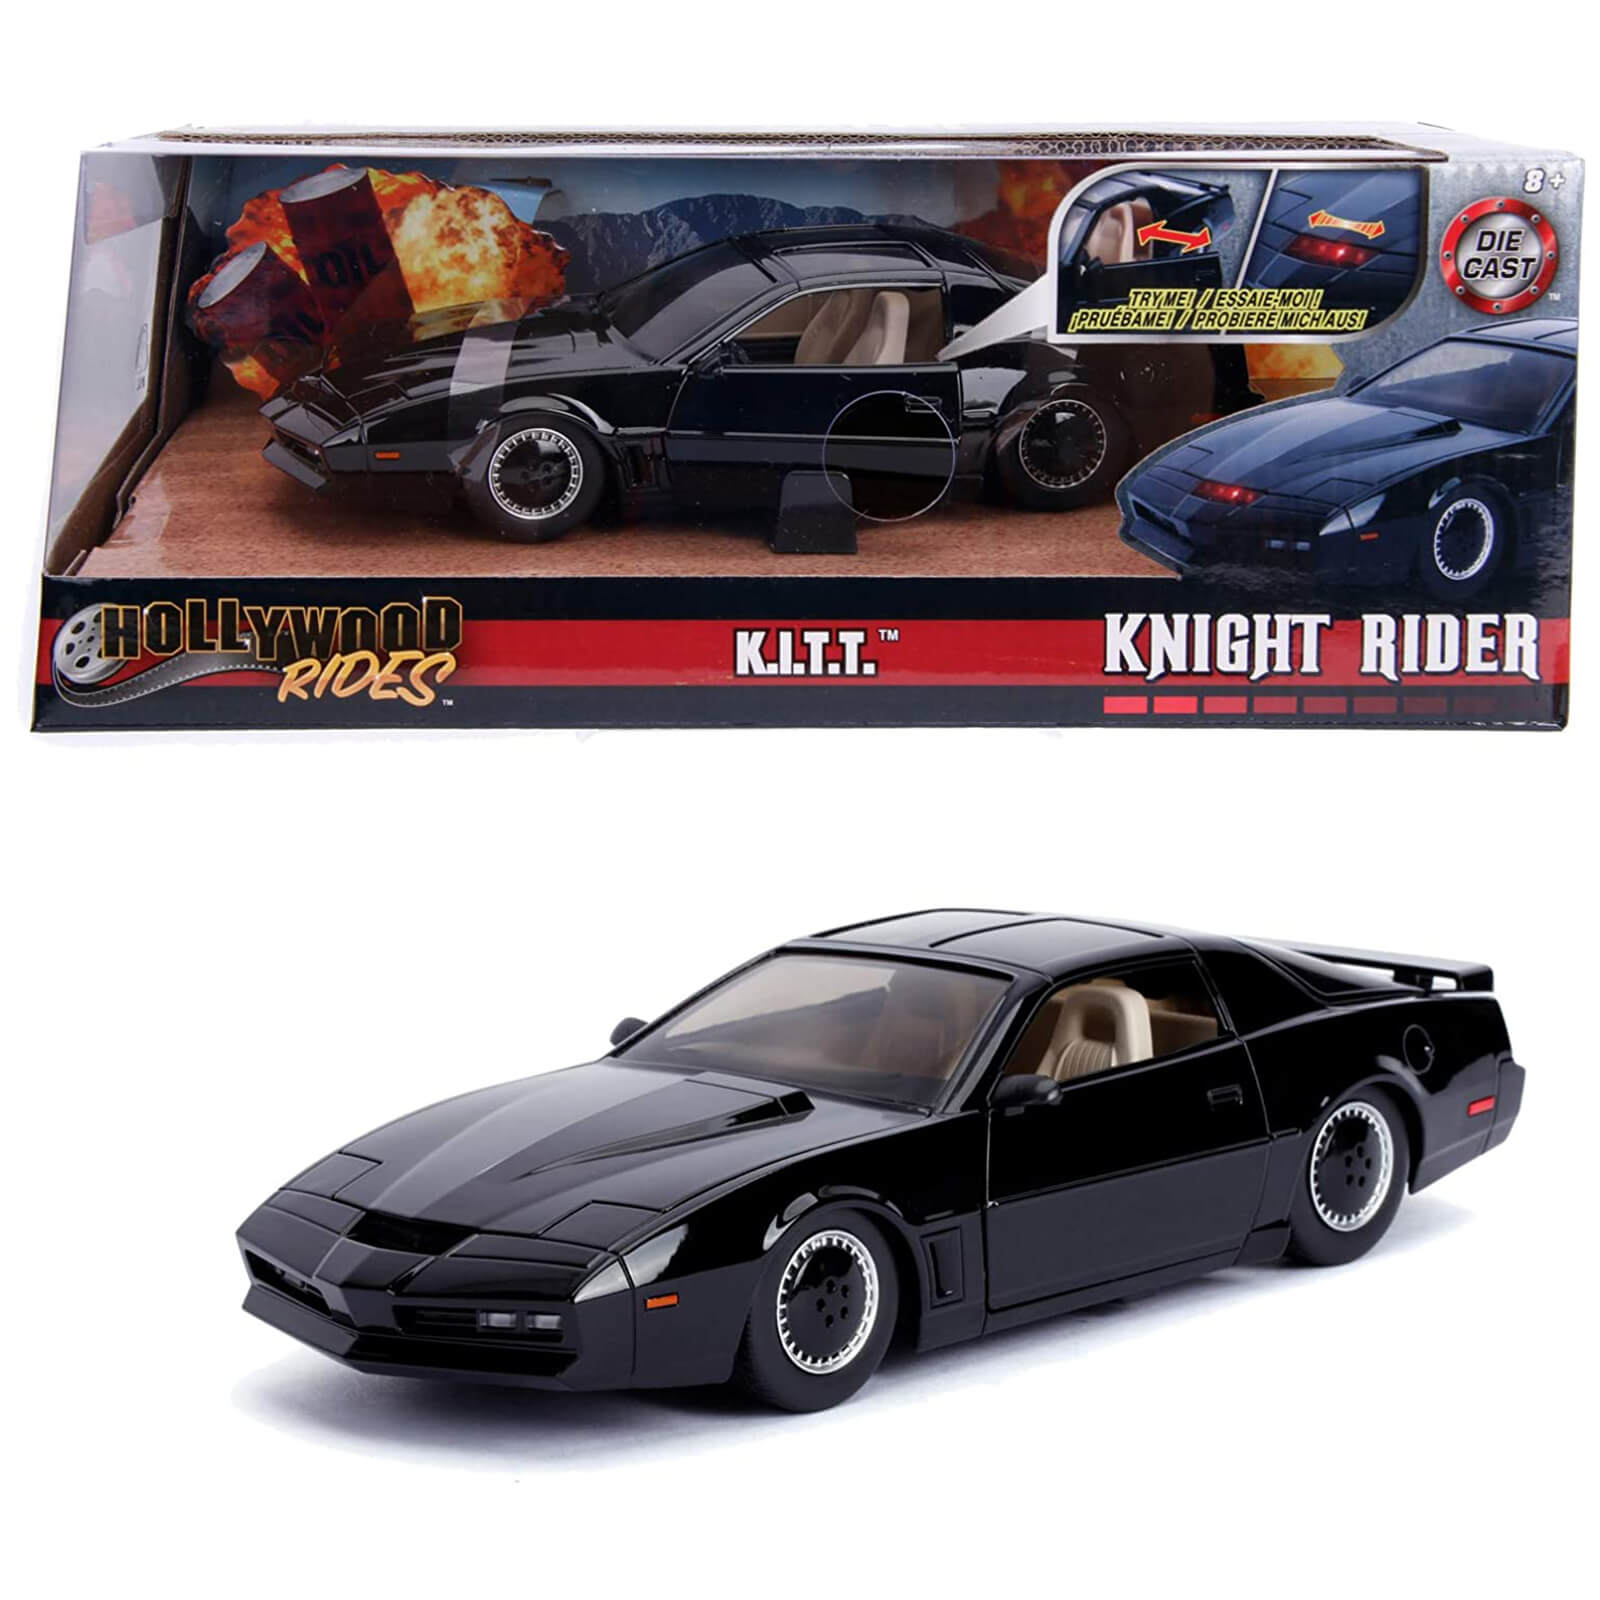 Jada Toys Knight Rider 1982 Pontiac Trans Am 1:24